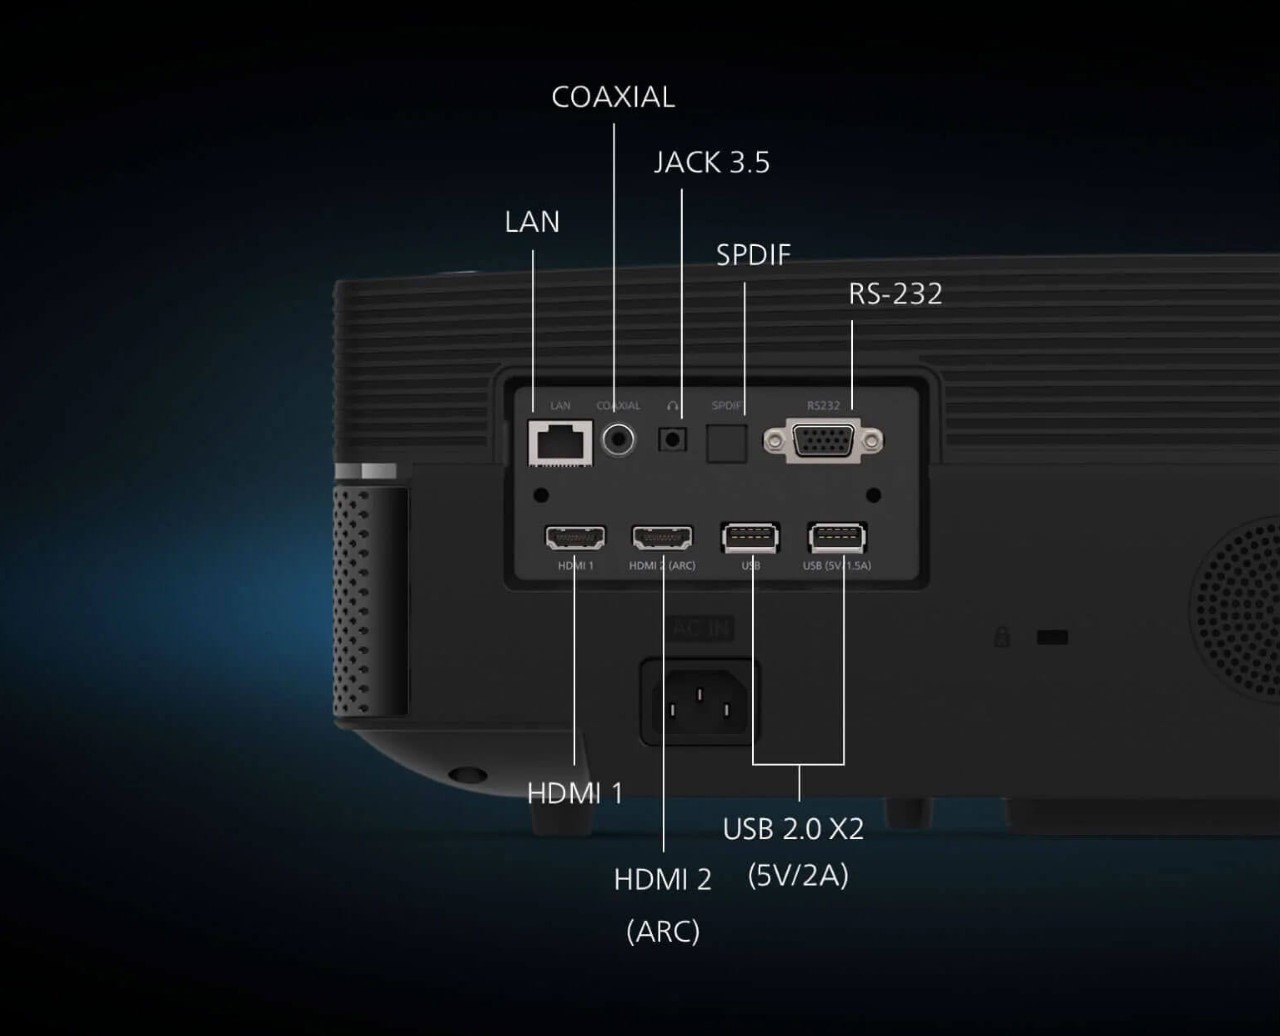 Projecteur 4K à ultra courte focale Philips Screeneo U5